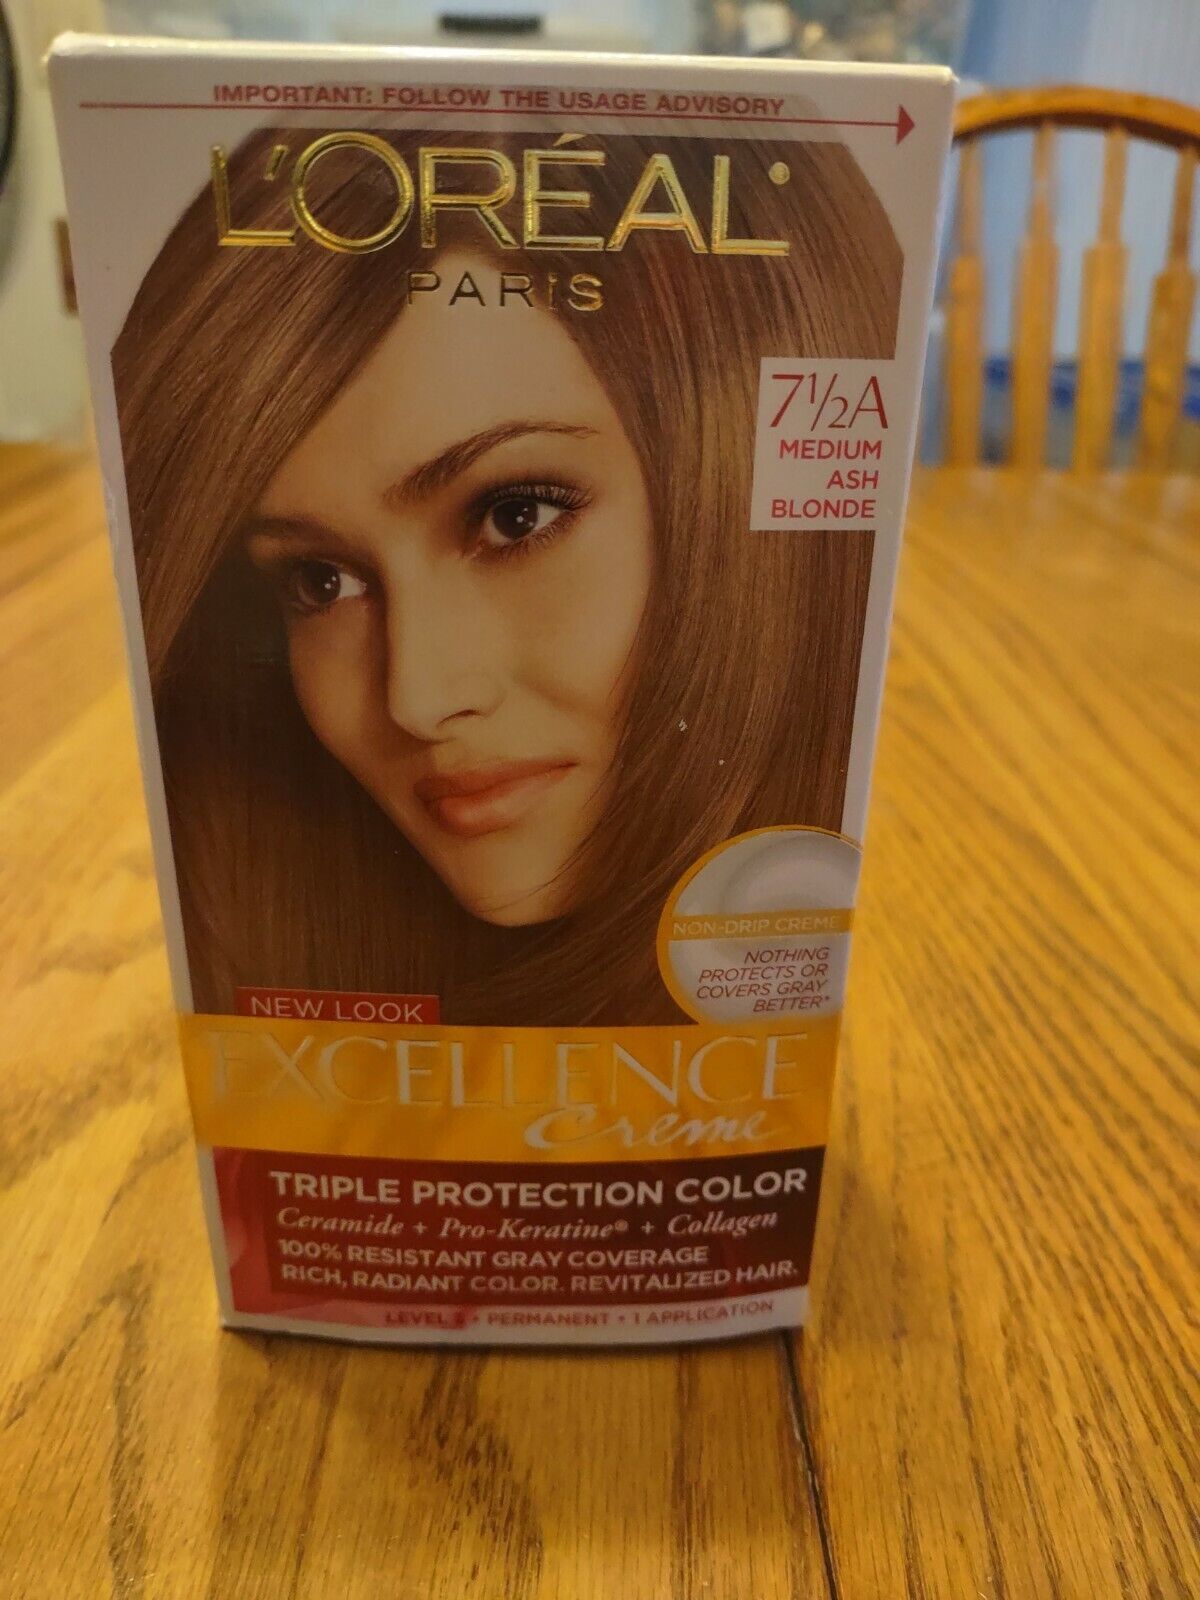 LOREAL Excellence Creme 7 1/2A Medium Ash Blonde Hair Dye - $19.68